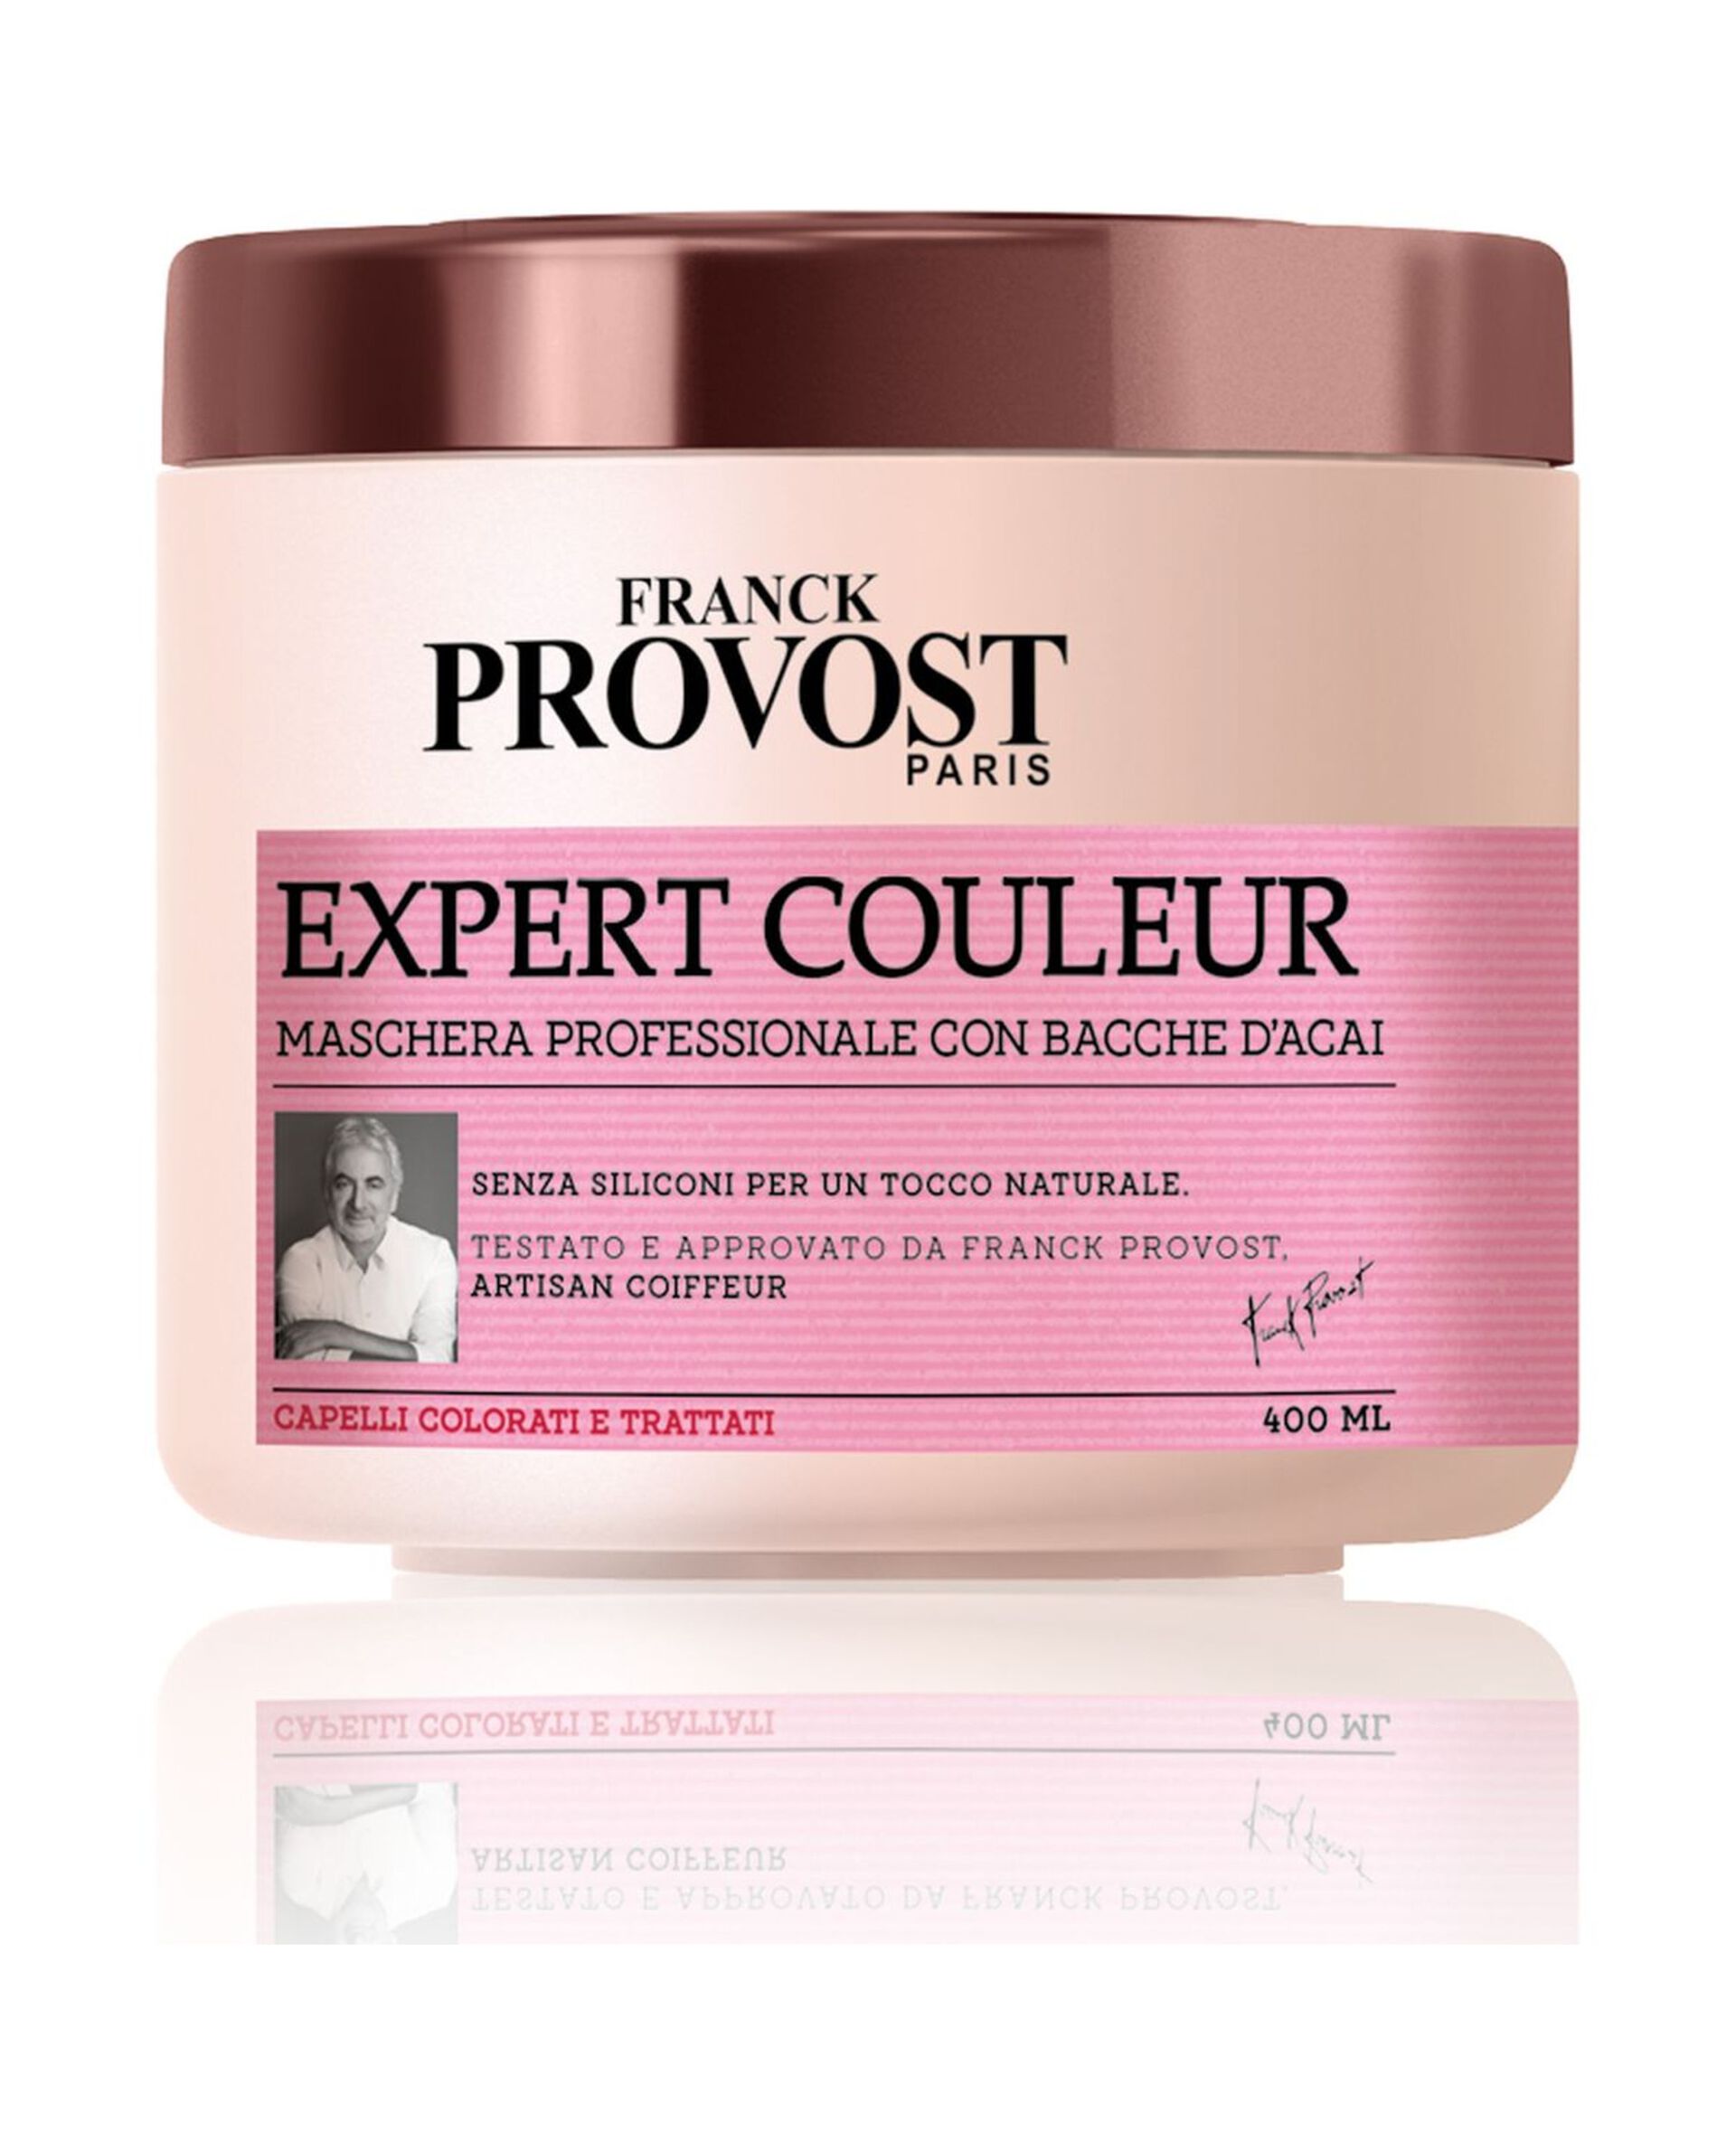 Franck Provost Maschera Professionale Expert Couleur, Maschera con Bacche d'Acai per capelli colorati e trattati, , 400 ml.